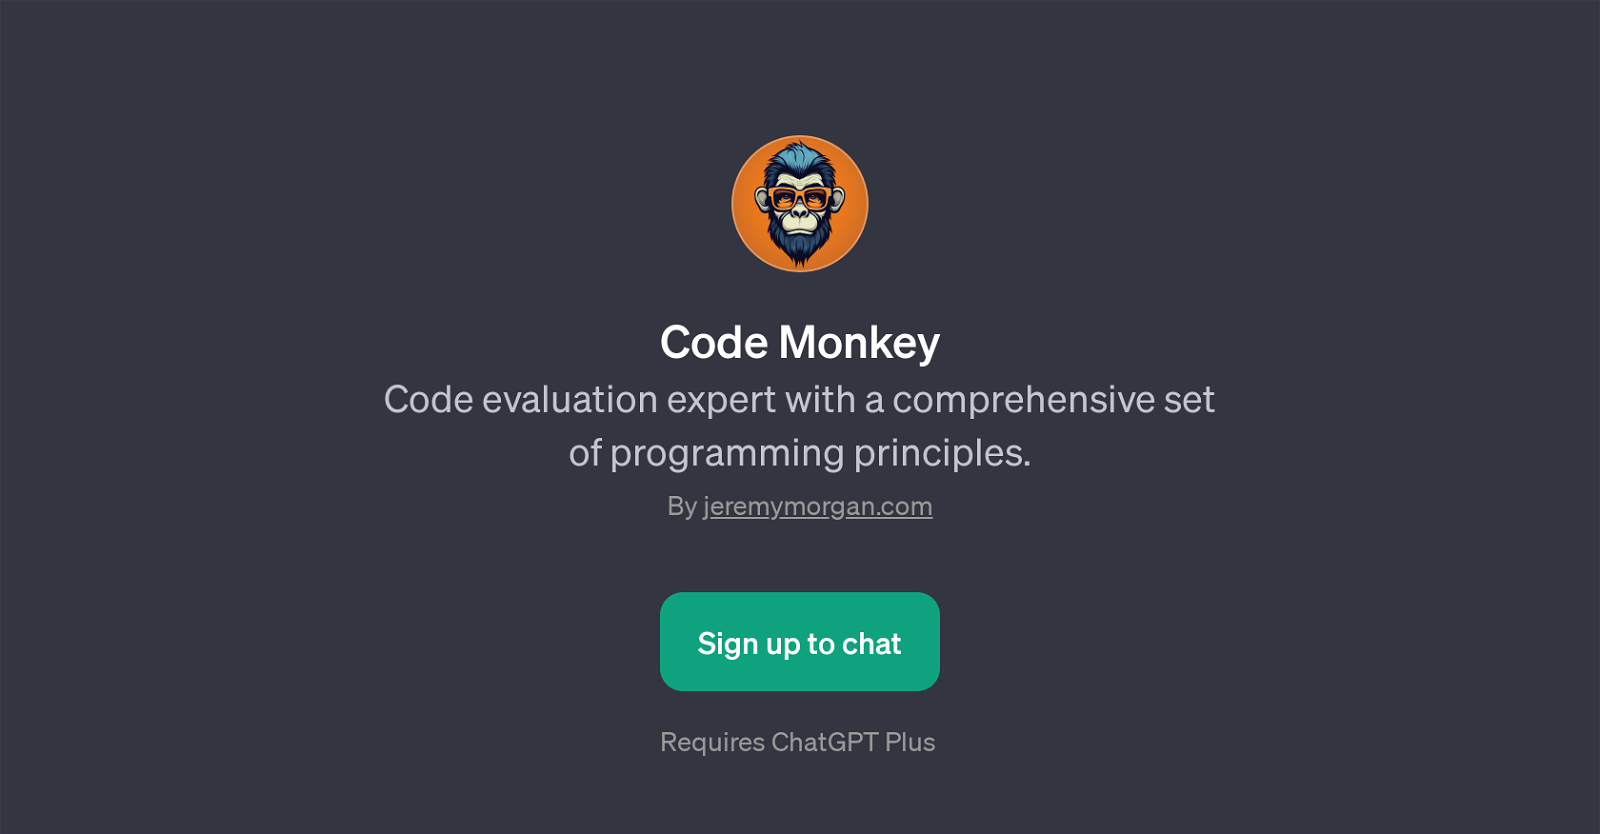 Code Monkey website